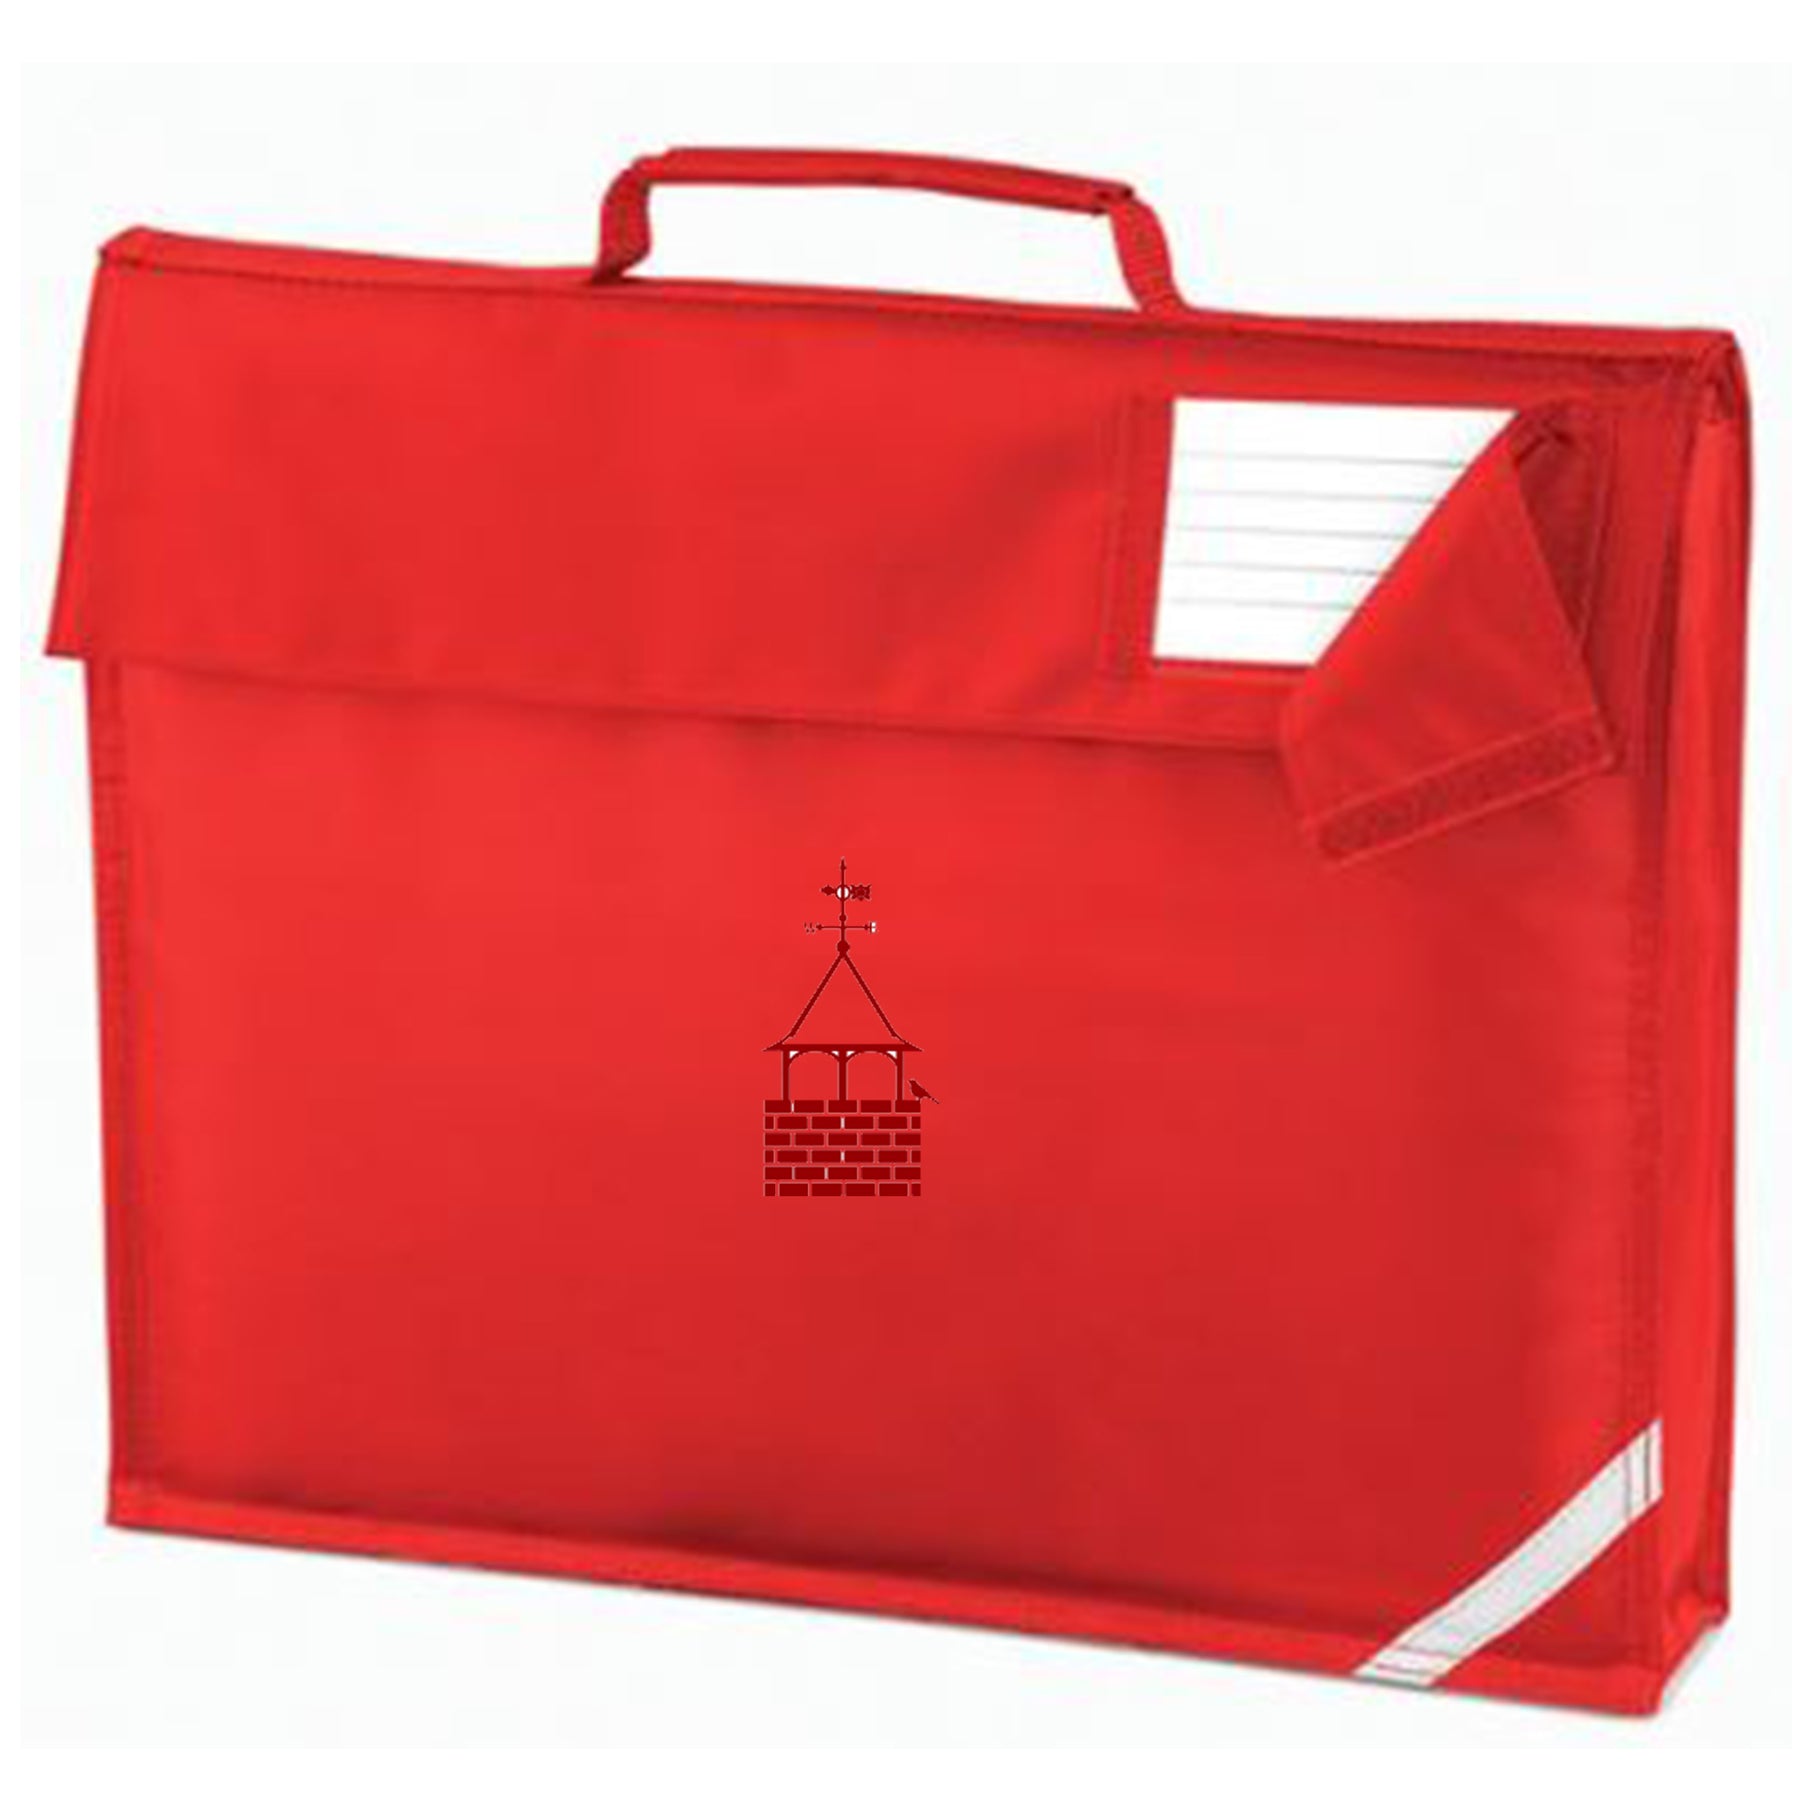 Juniper Hill School Book Bag: Red